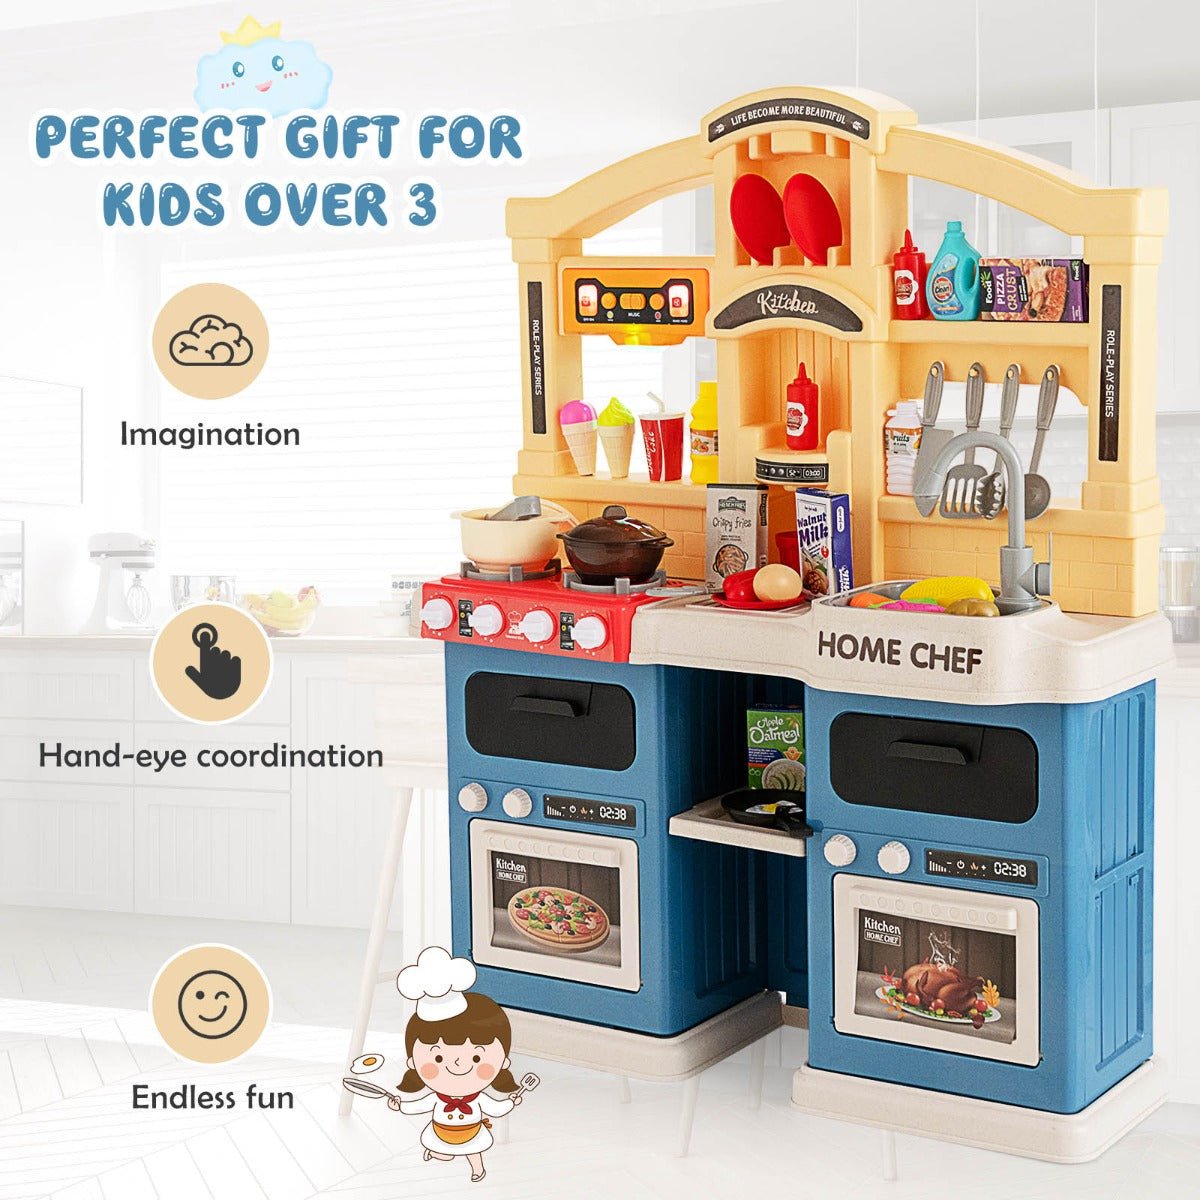 69 Piece Kids Culinary Adventure Kitchen Playset Blue - Kids Mega Mart